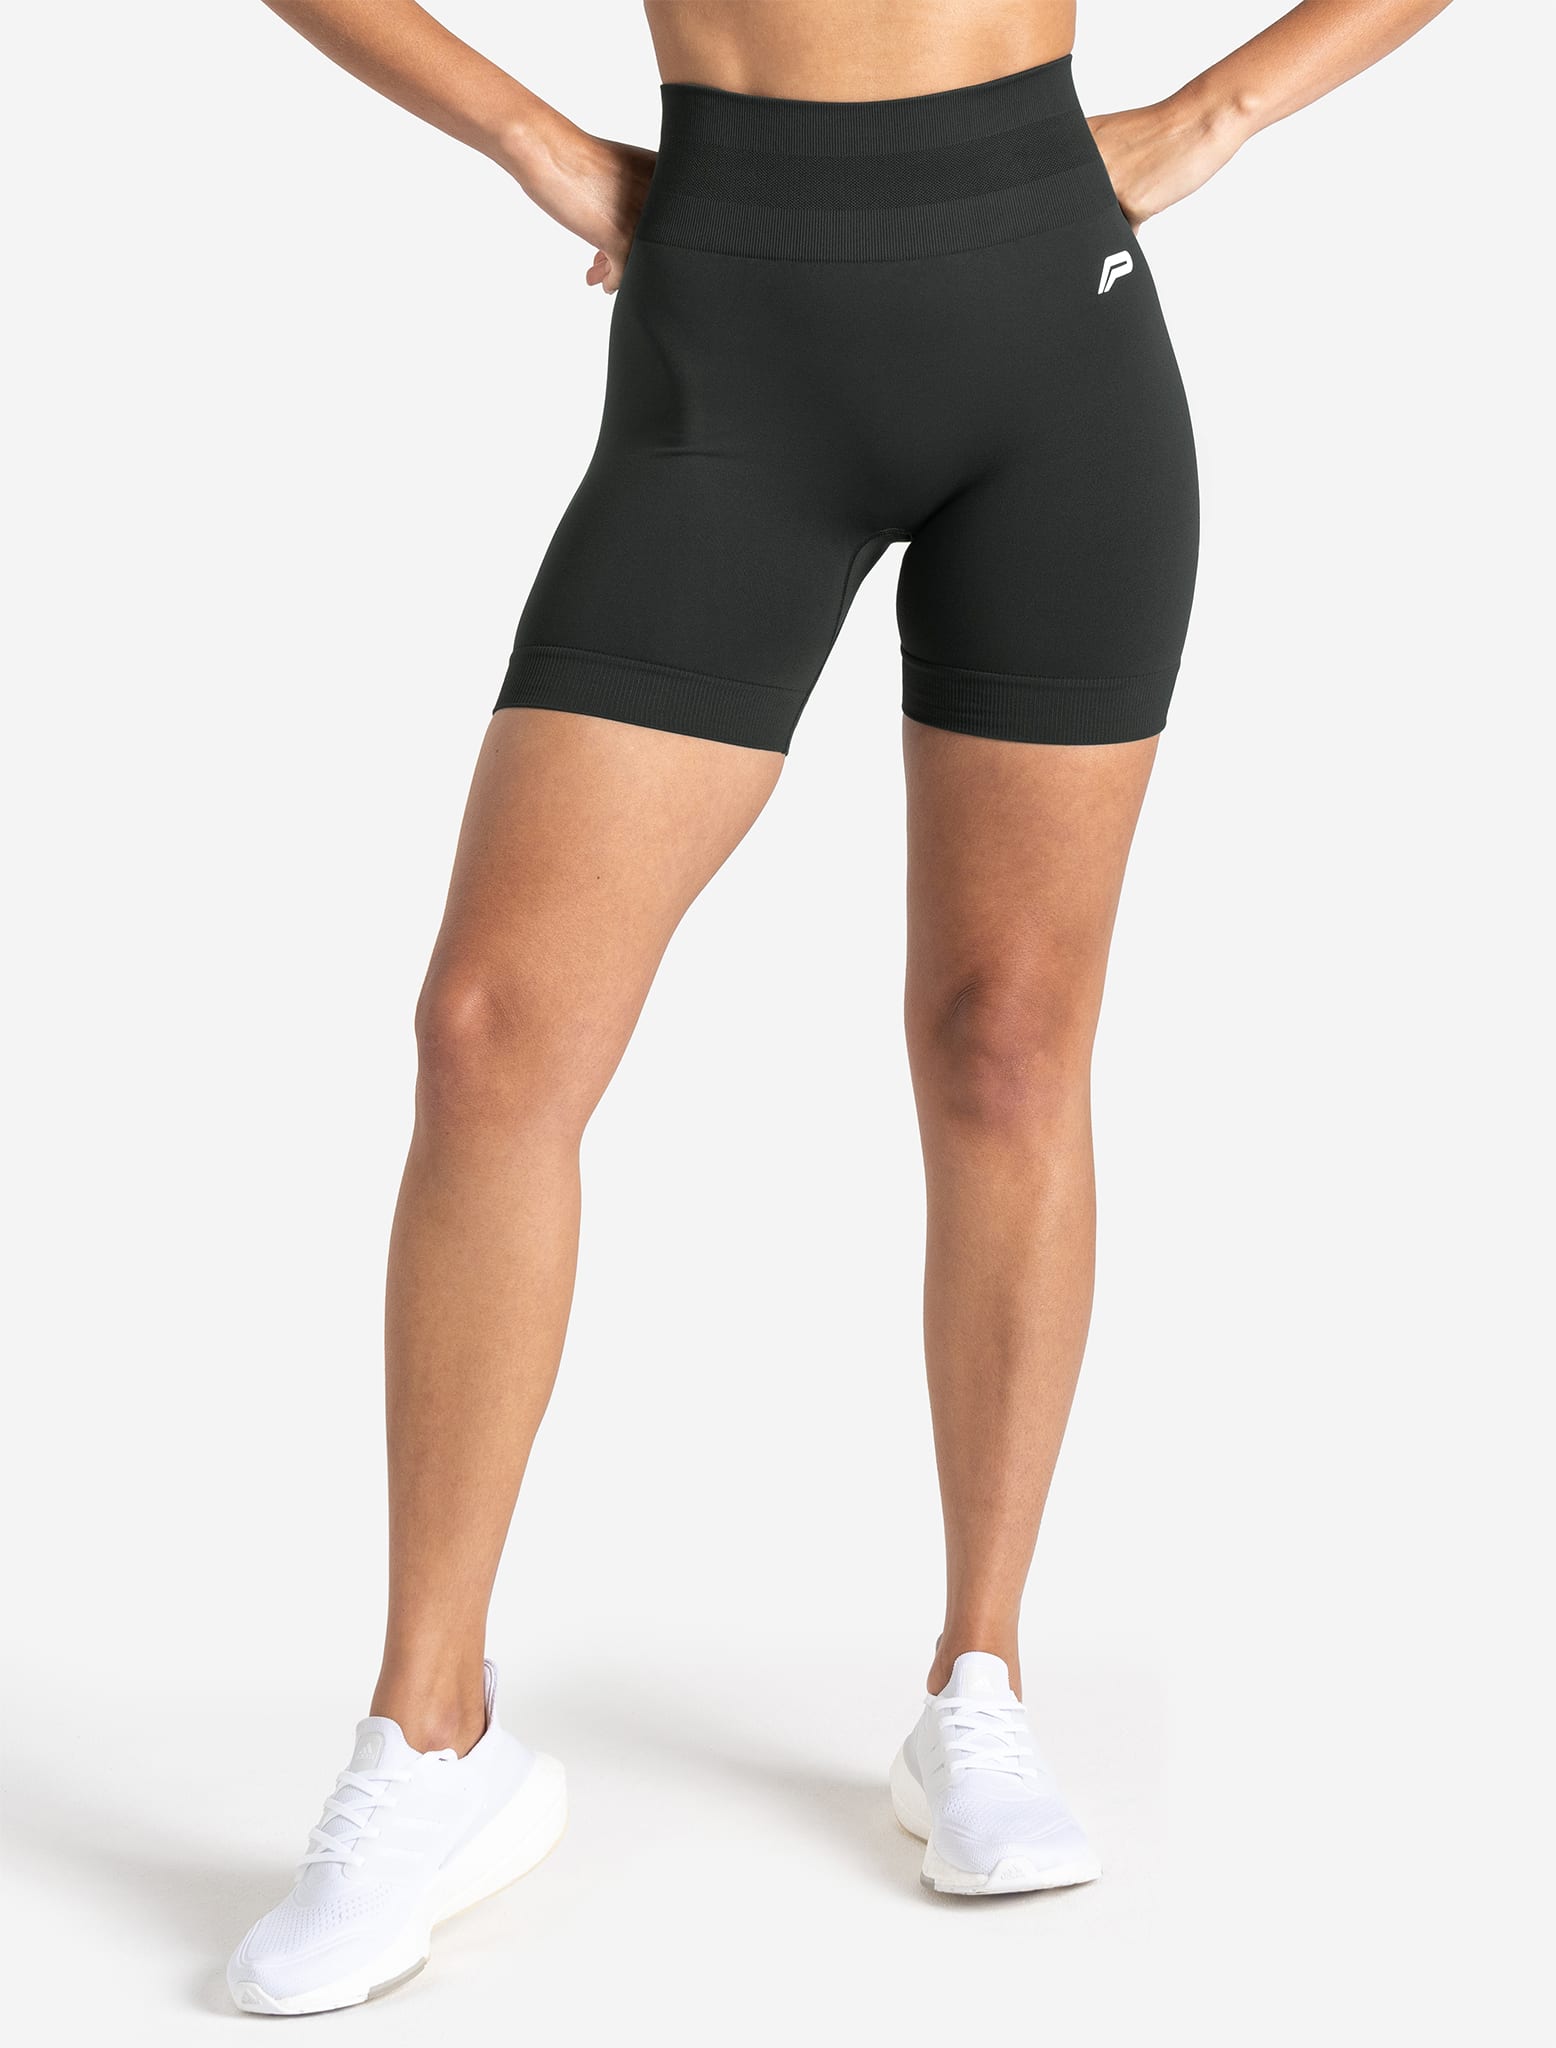 Scrunch Seamless Shorts - Woodland Grey Pursue Fitness 1